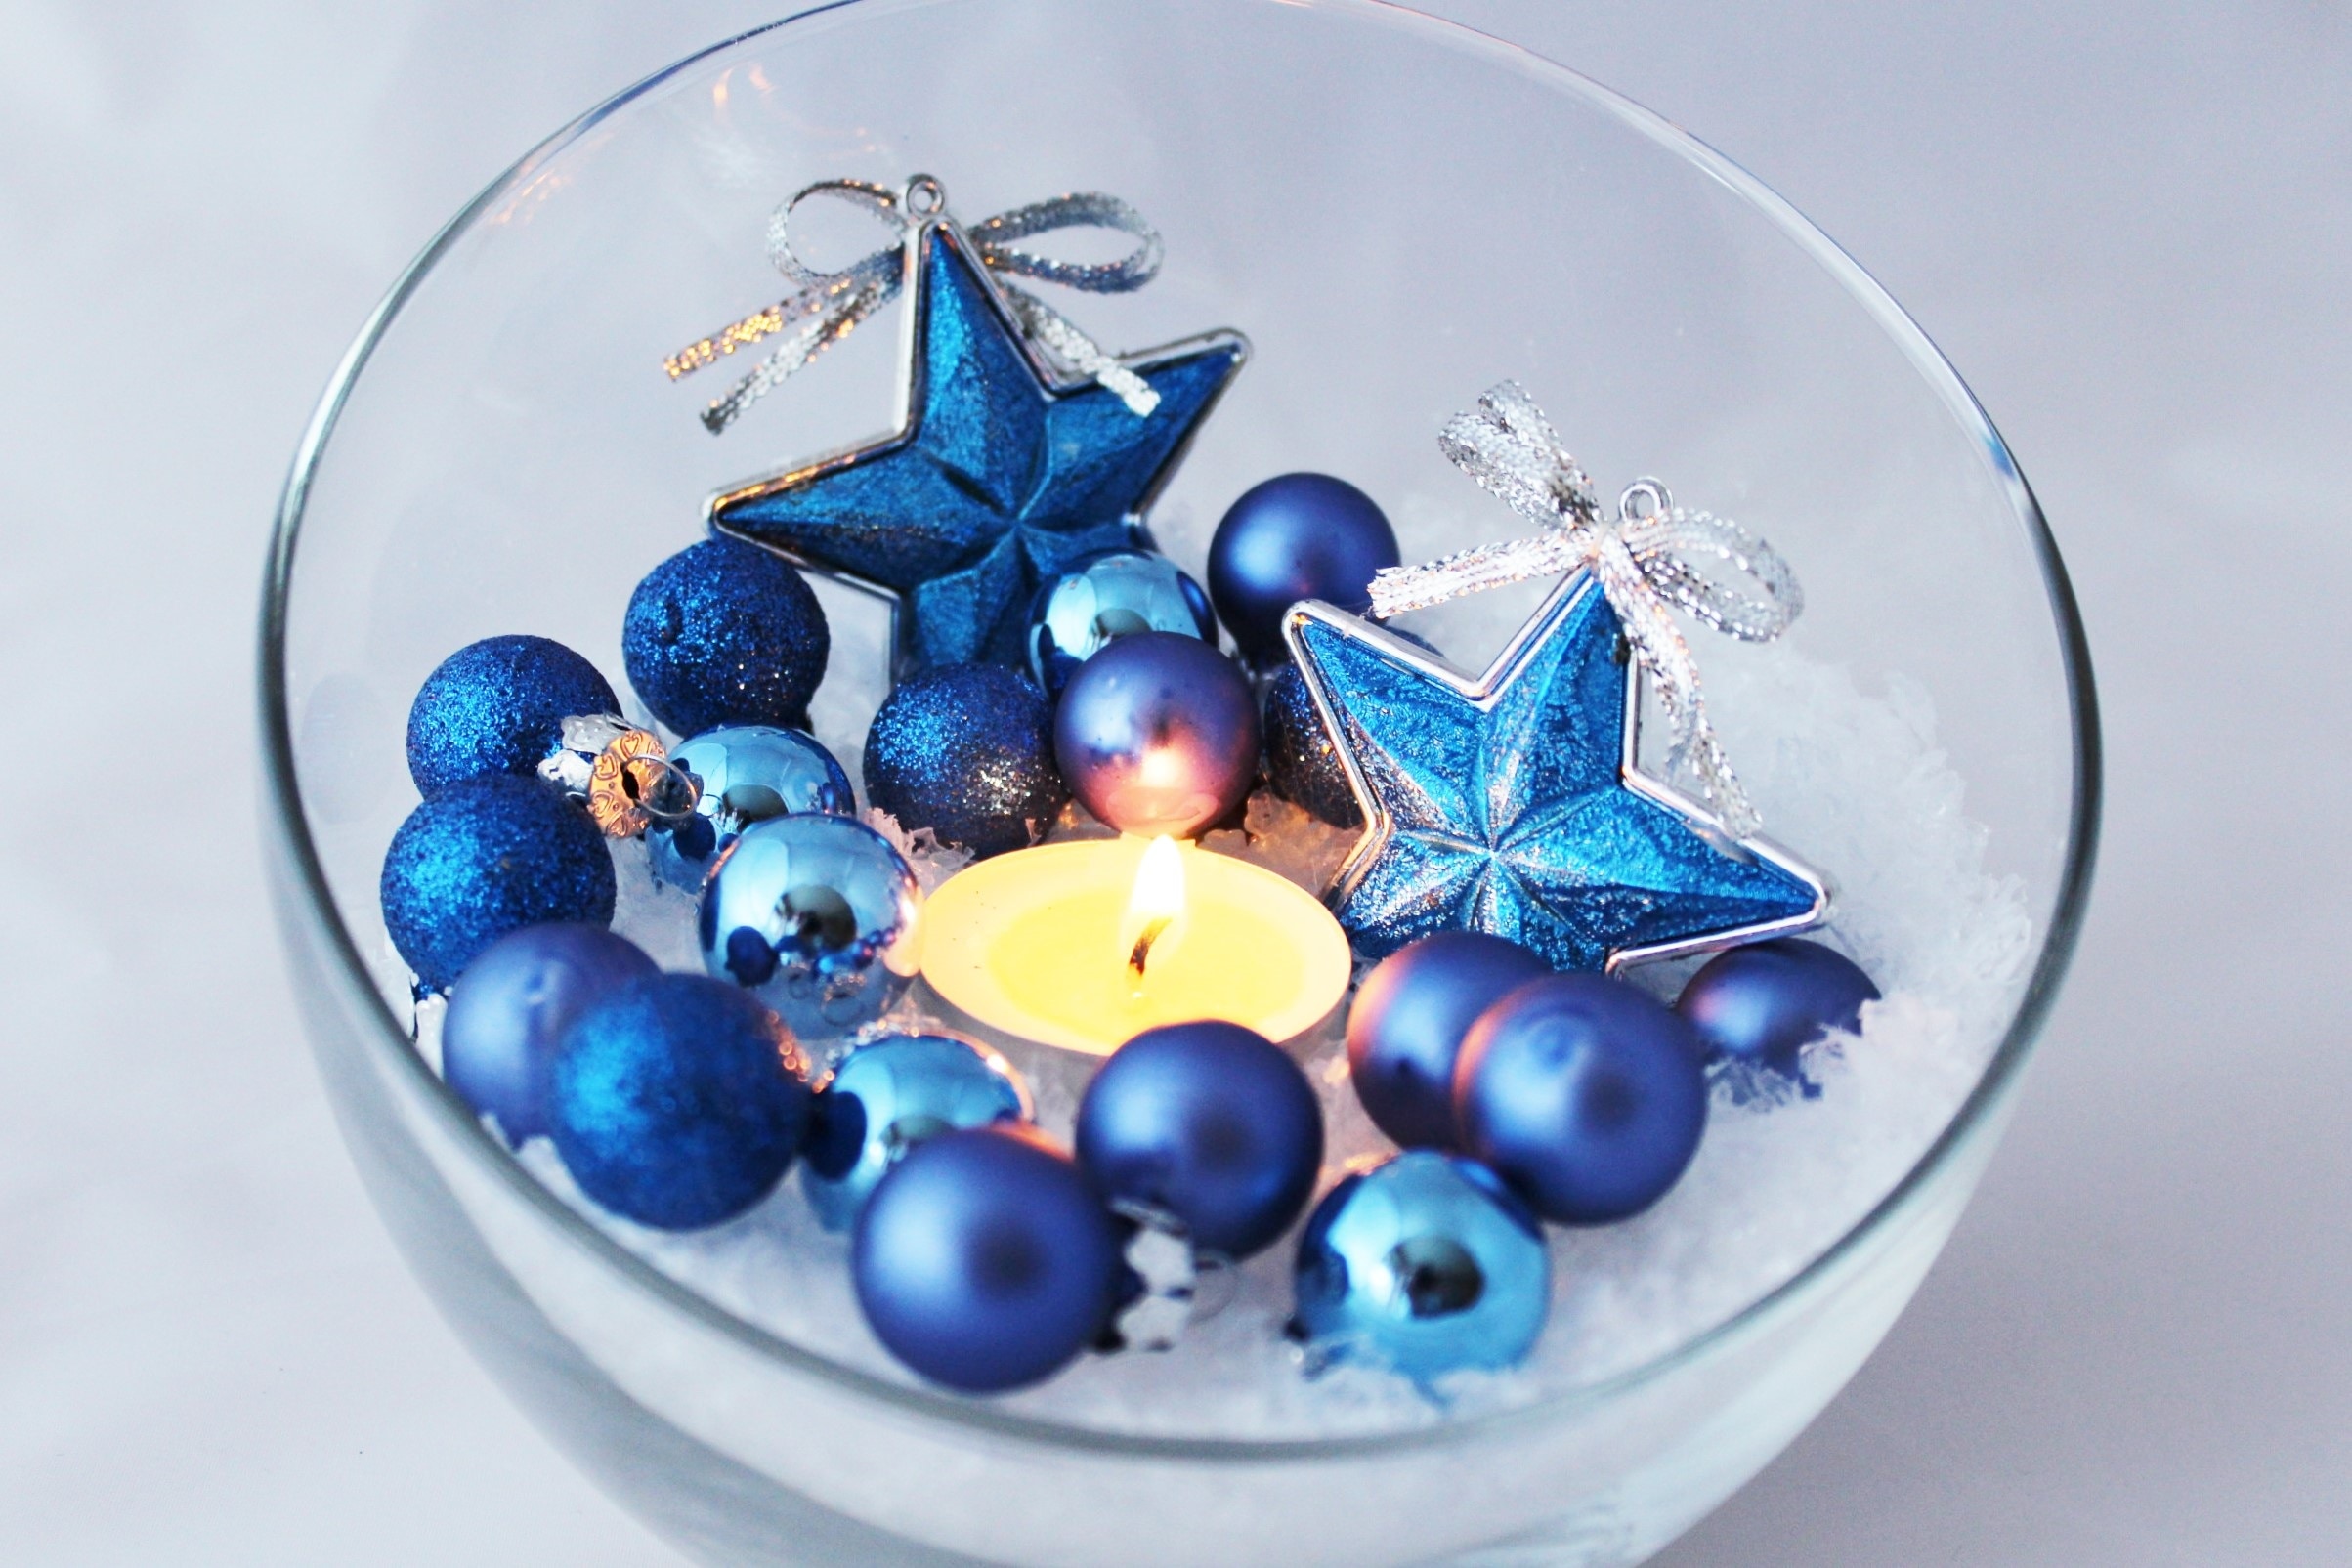 1280x1024 wallpaper | Poinsettia, Background, Christmas, Star, blue ...